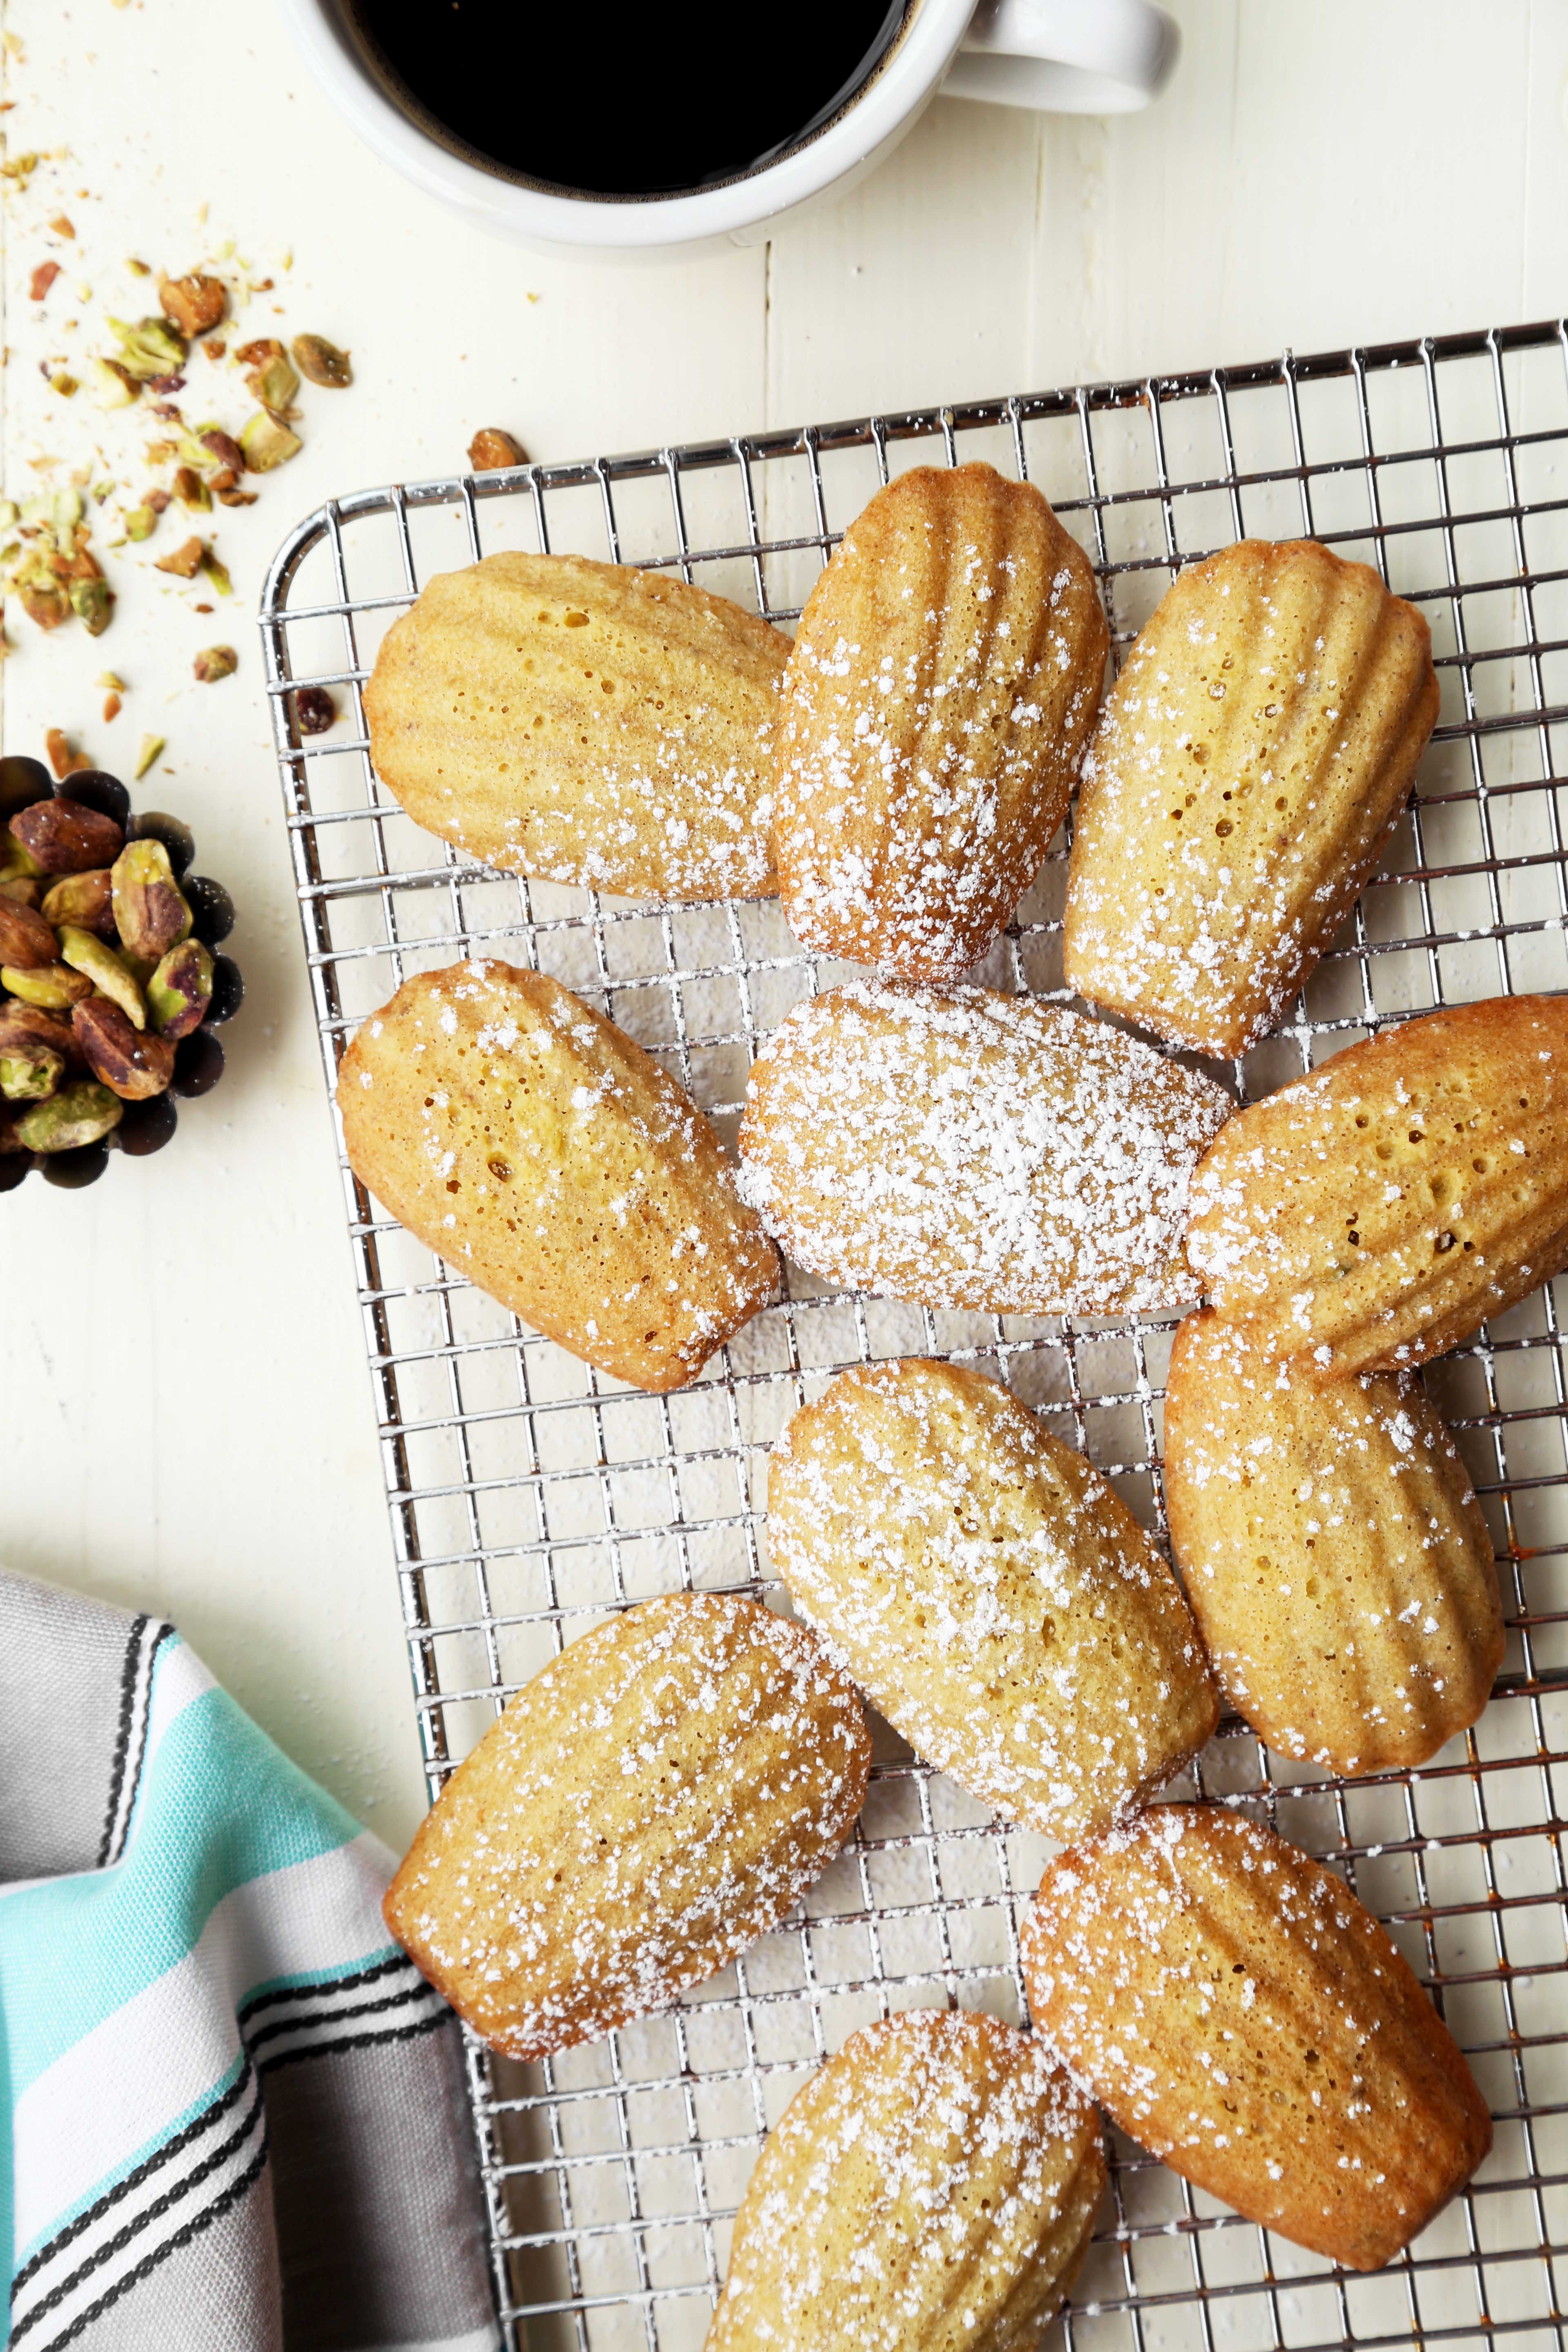 Easy Madeleine Cookies Recipe - Little Sweet Baker